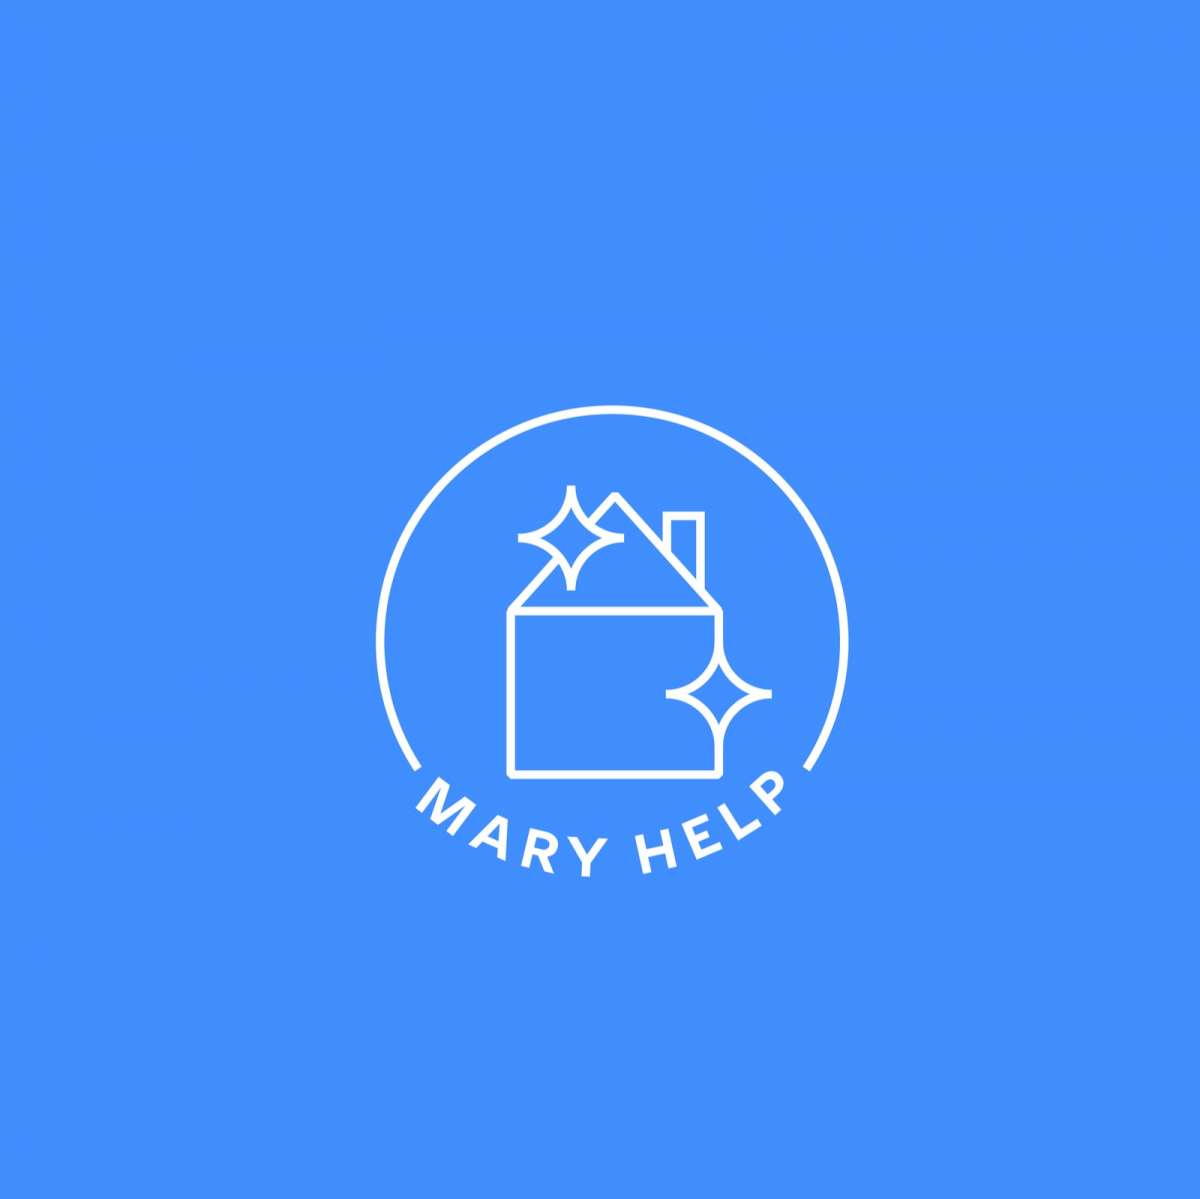 Mary Help - Vila Nova de Gaia - Limpeza de Propriedade